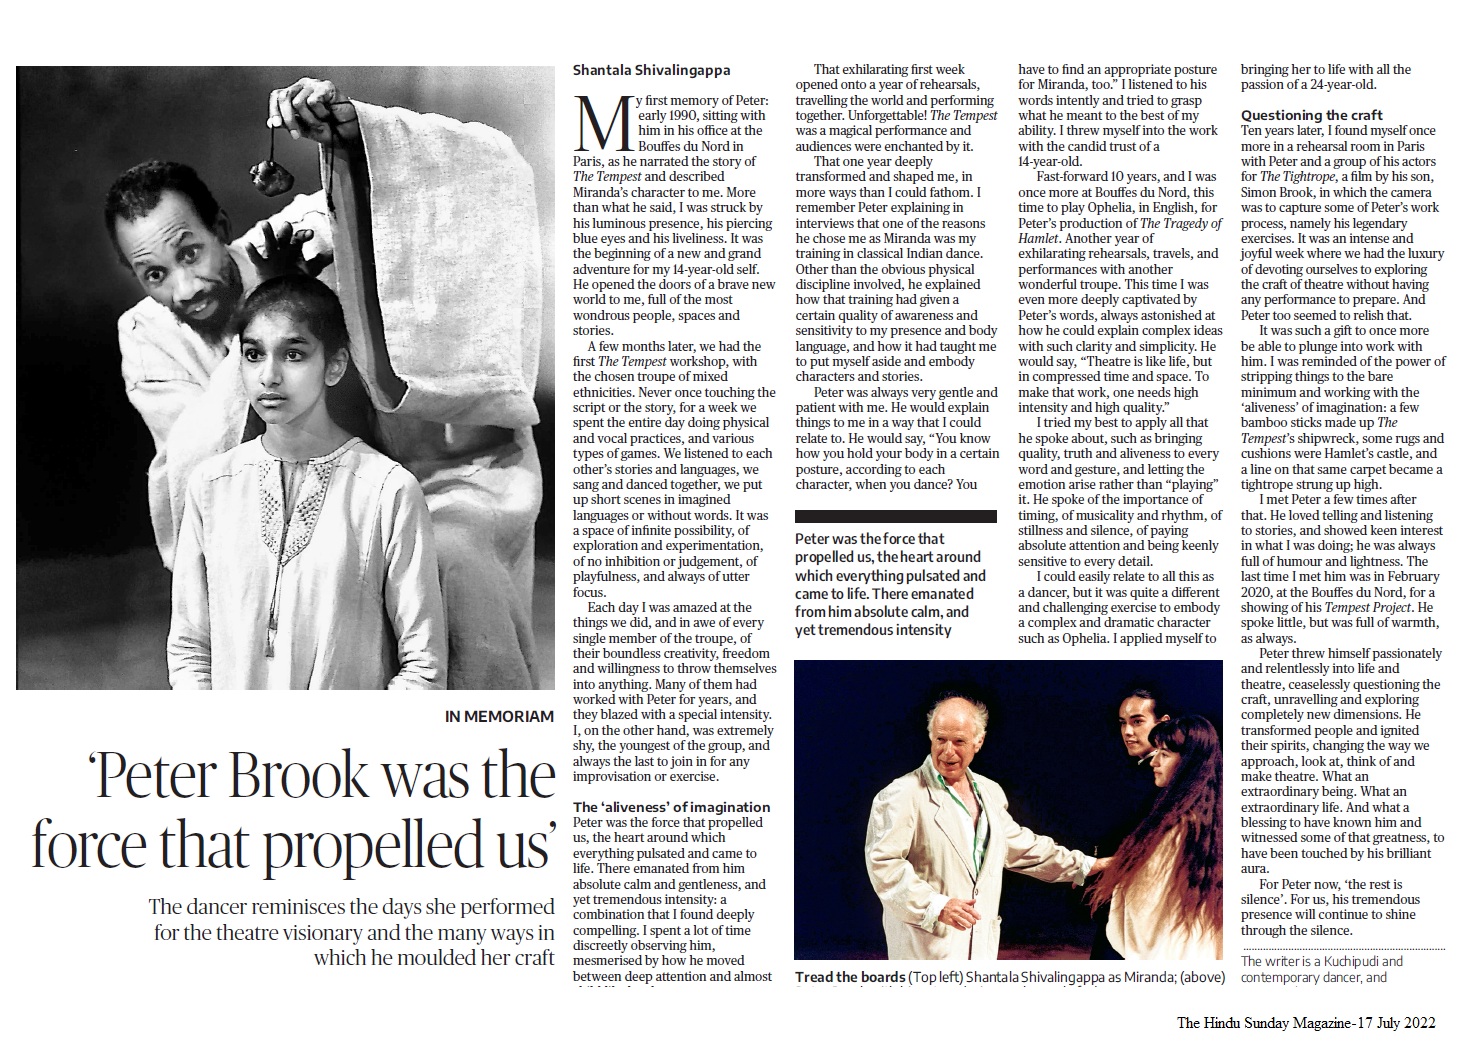 Peter Brook was the force that propelled us - Shantala Shivalingappa